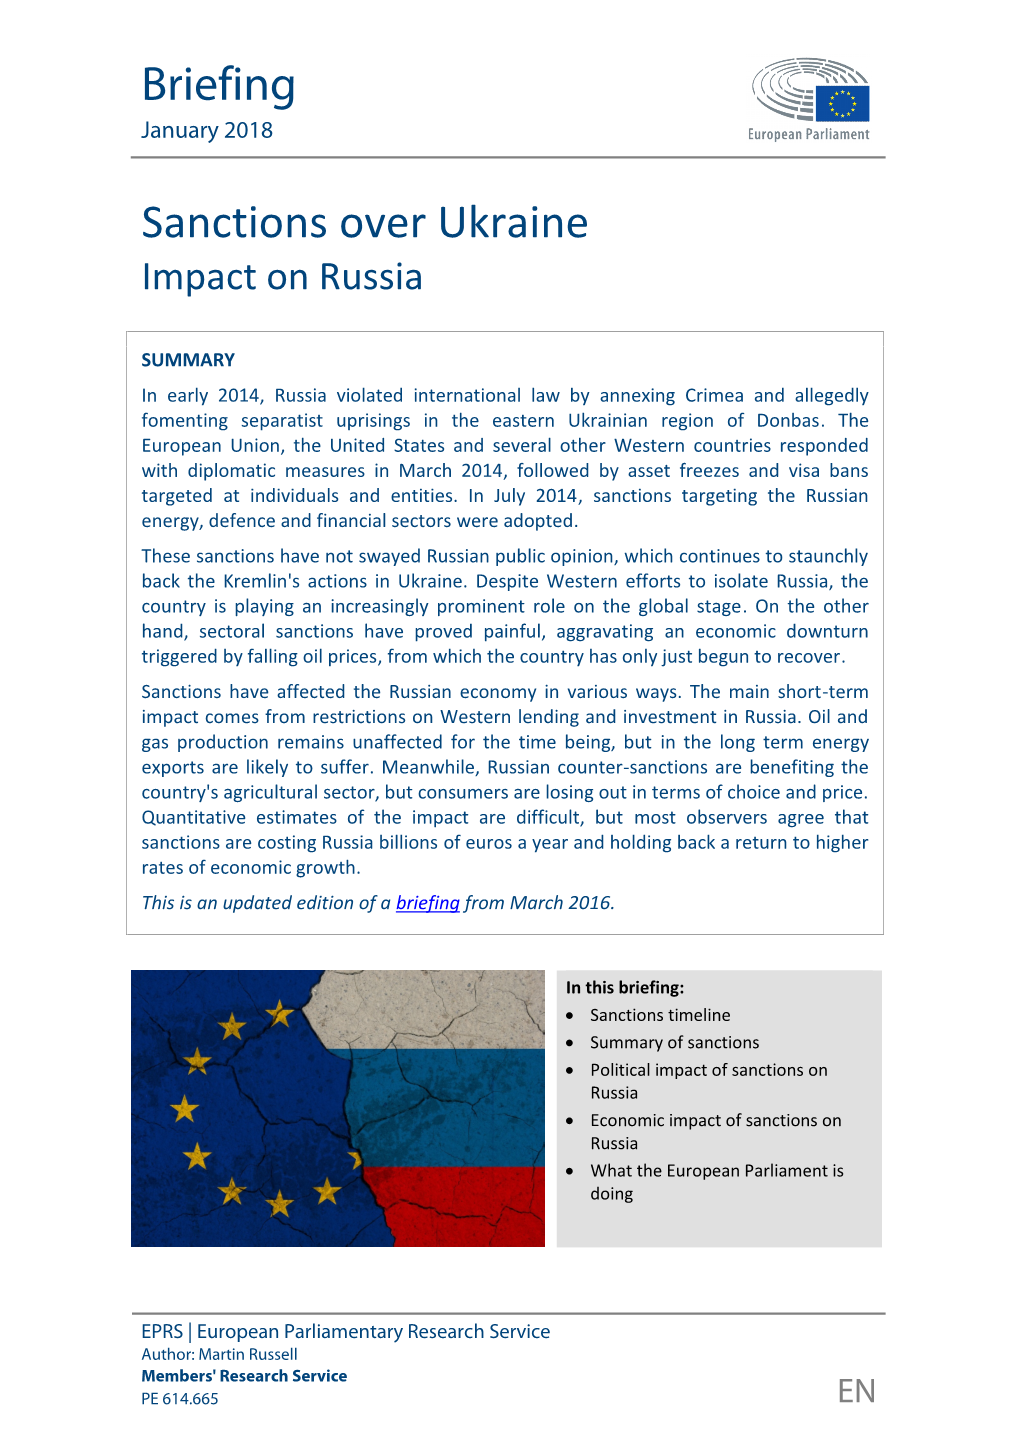 Sanctions Over Ukraine Impact on Russia